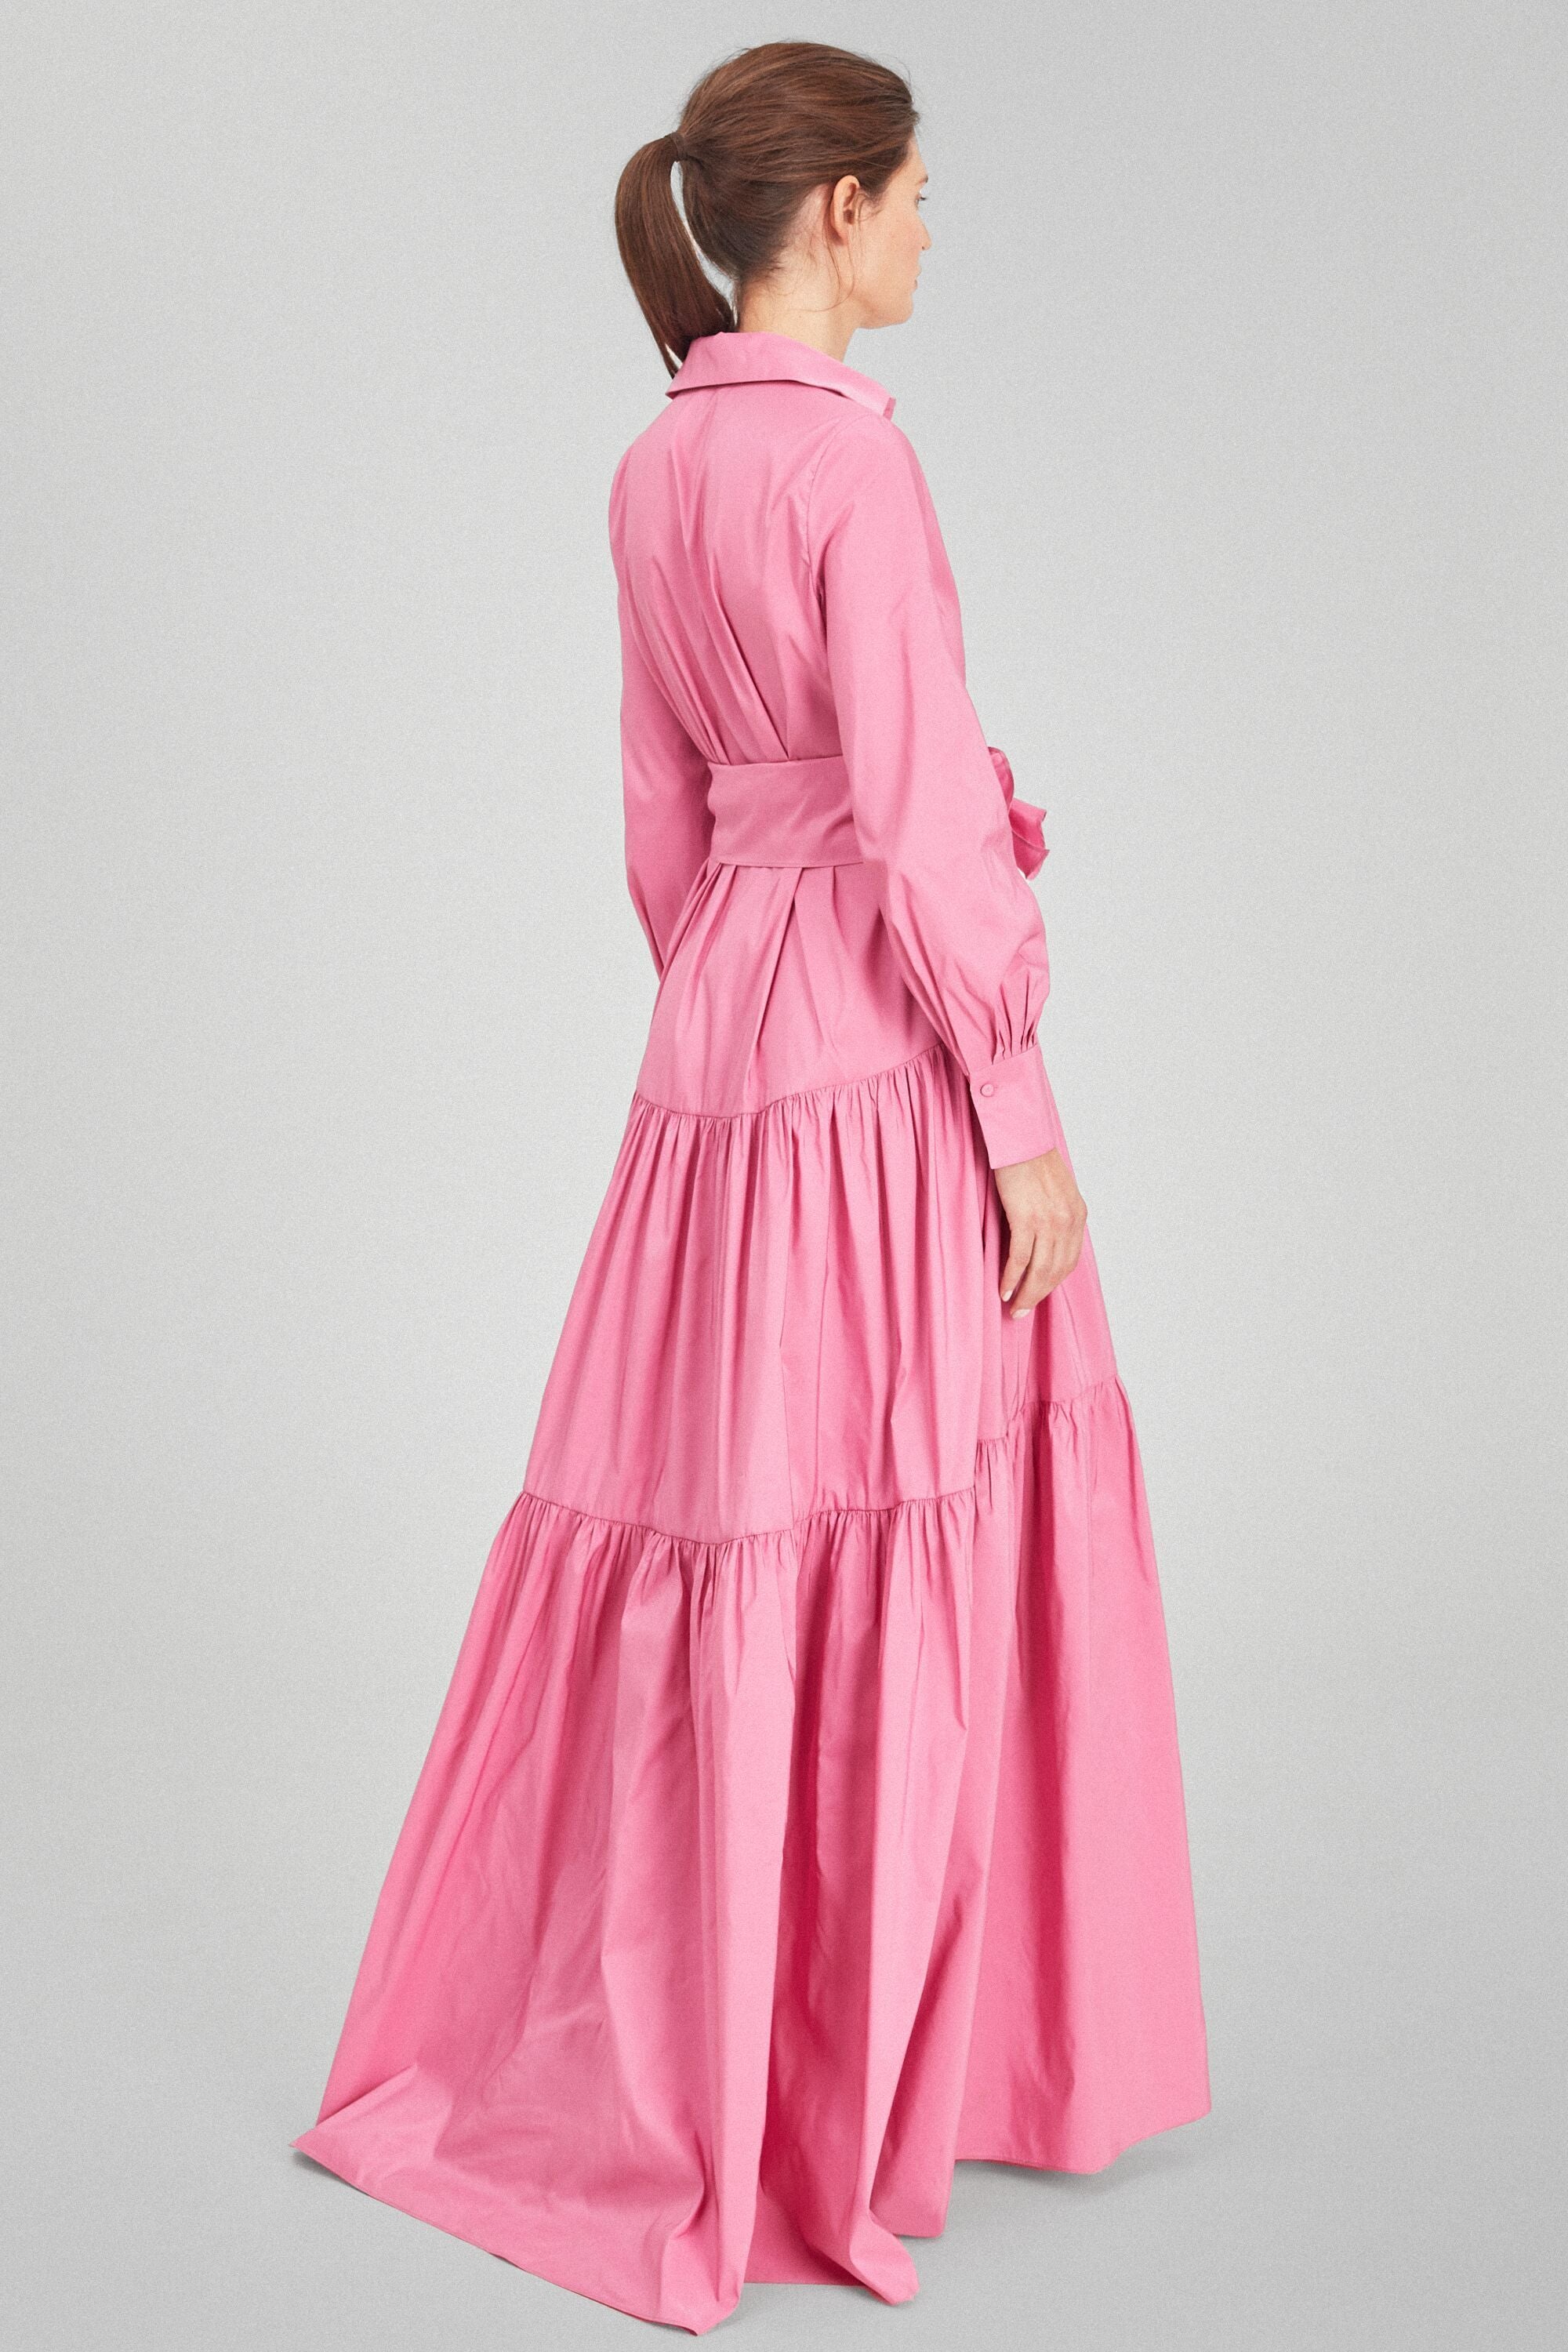 pink taffeta dress | Dresses Images 2022